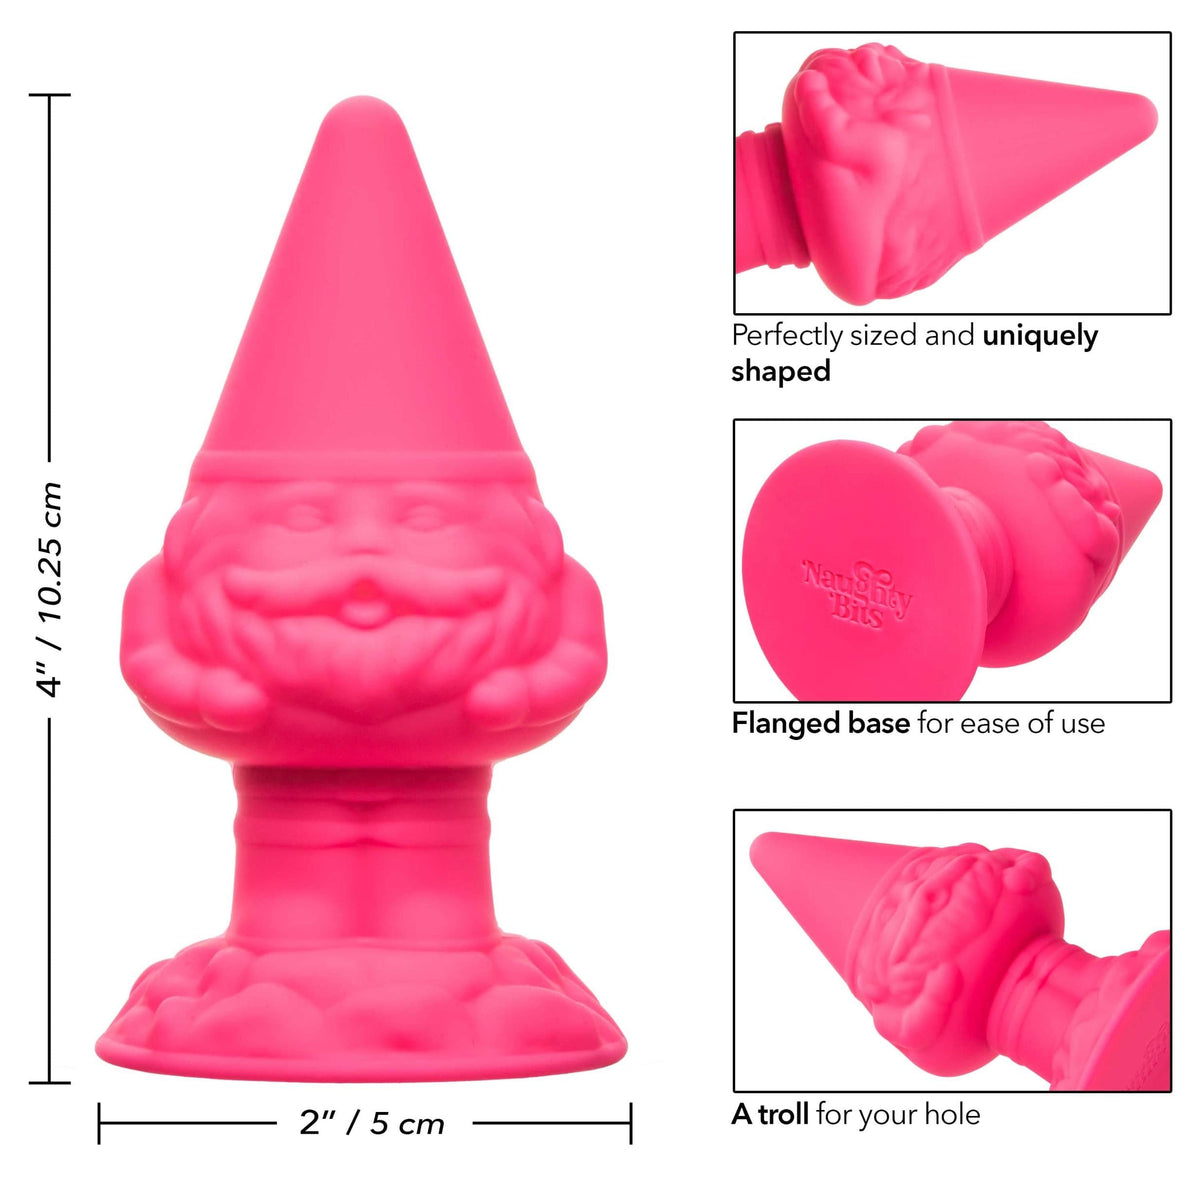 naughty bits anal gnome gnome butt plug pink